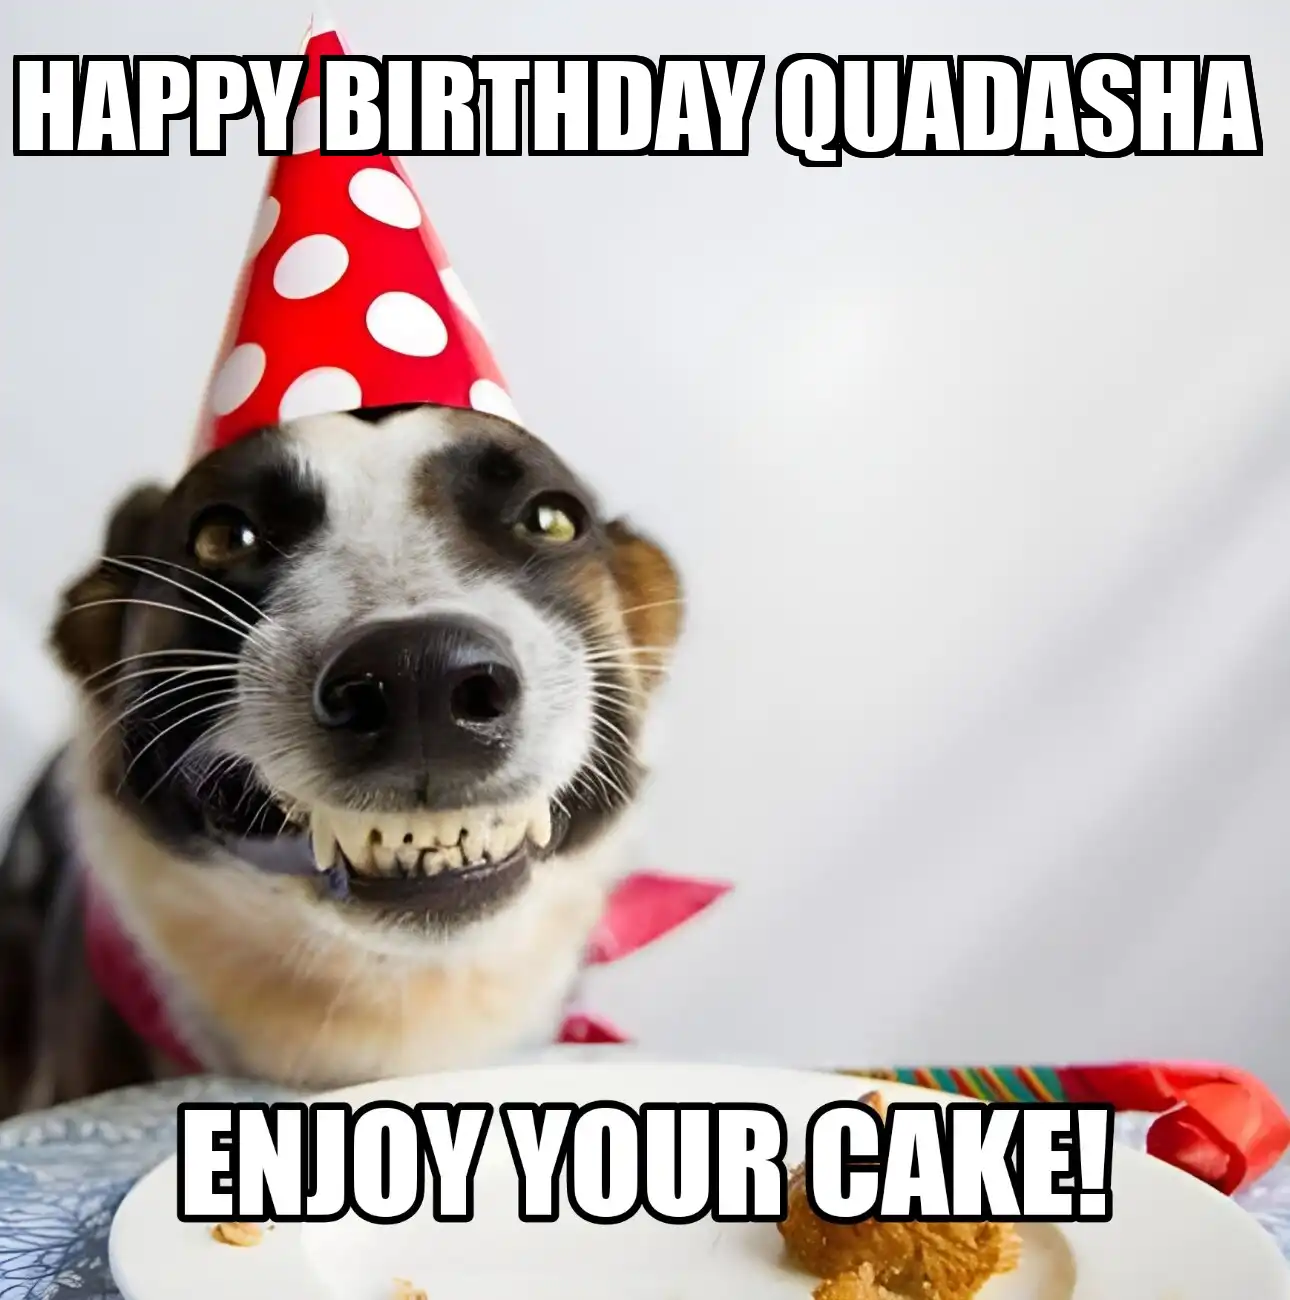 Happy Birthday Quadasha Enjoy Your Cake Dog Meme